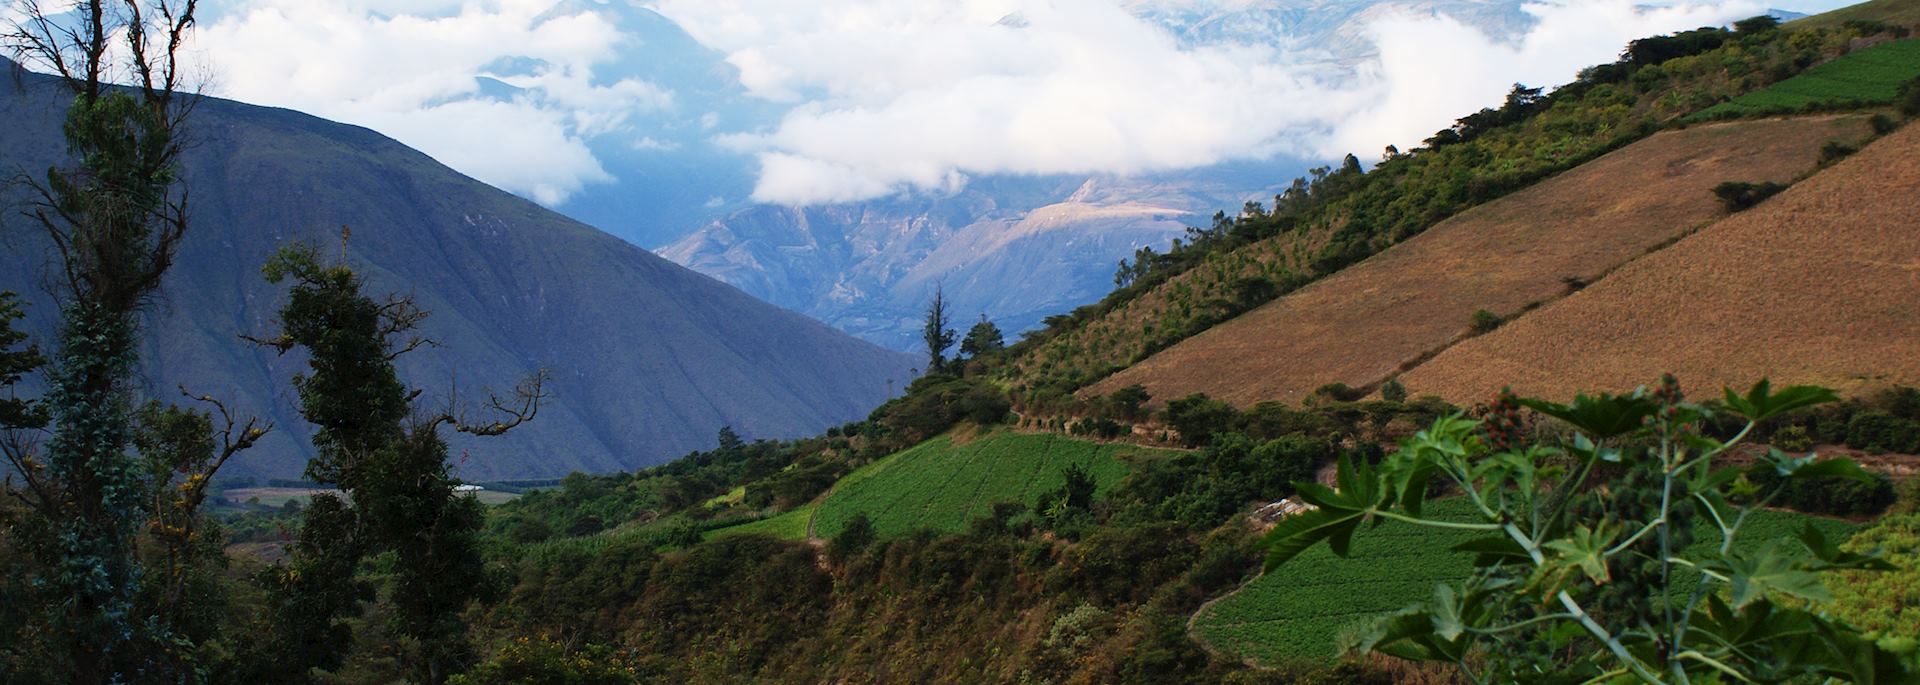 El Chota region, Ecuador